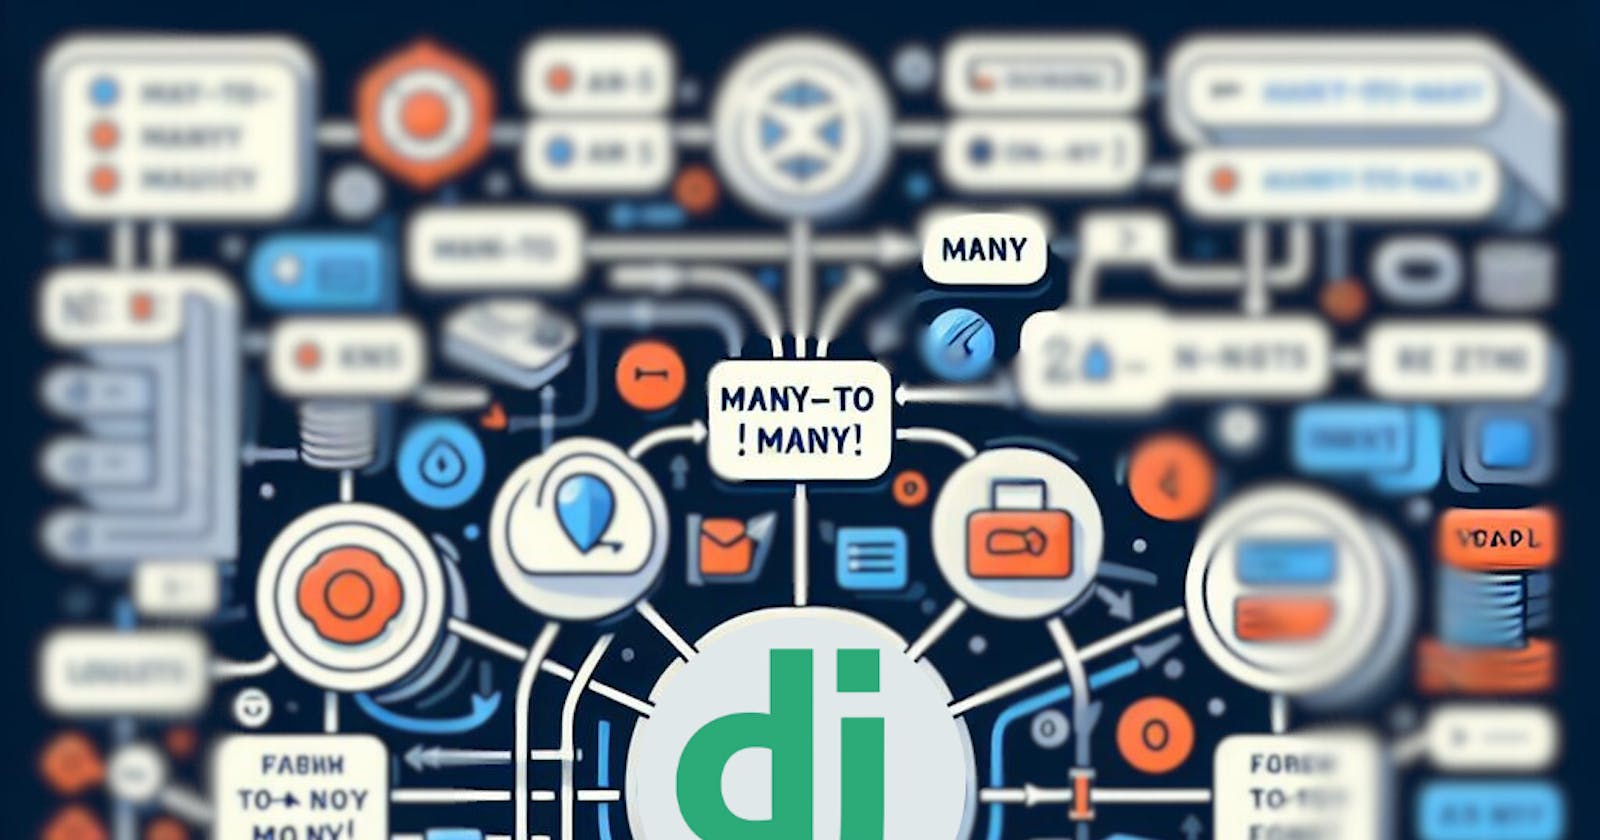 Database Relationships in Django